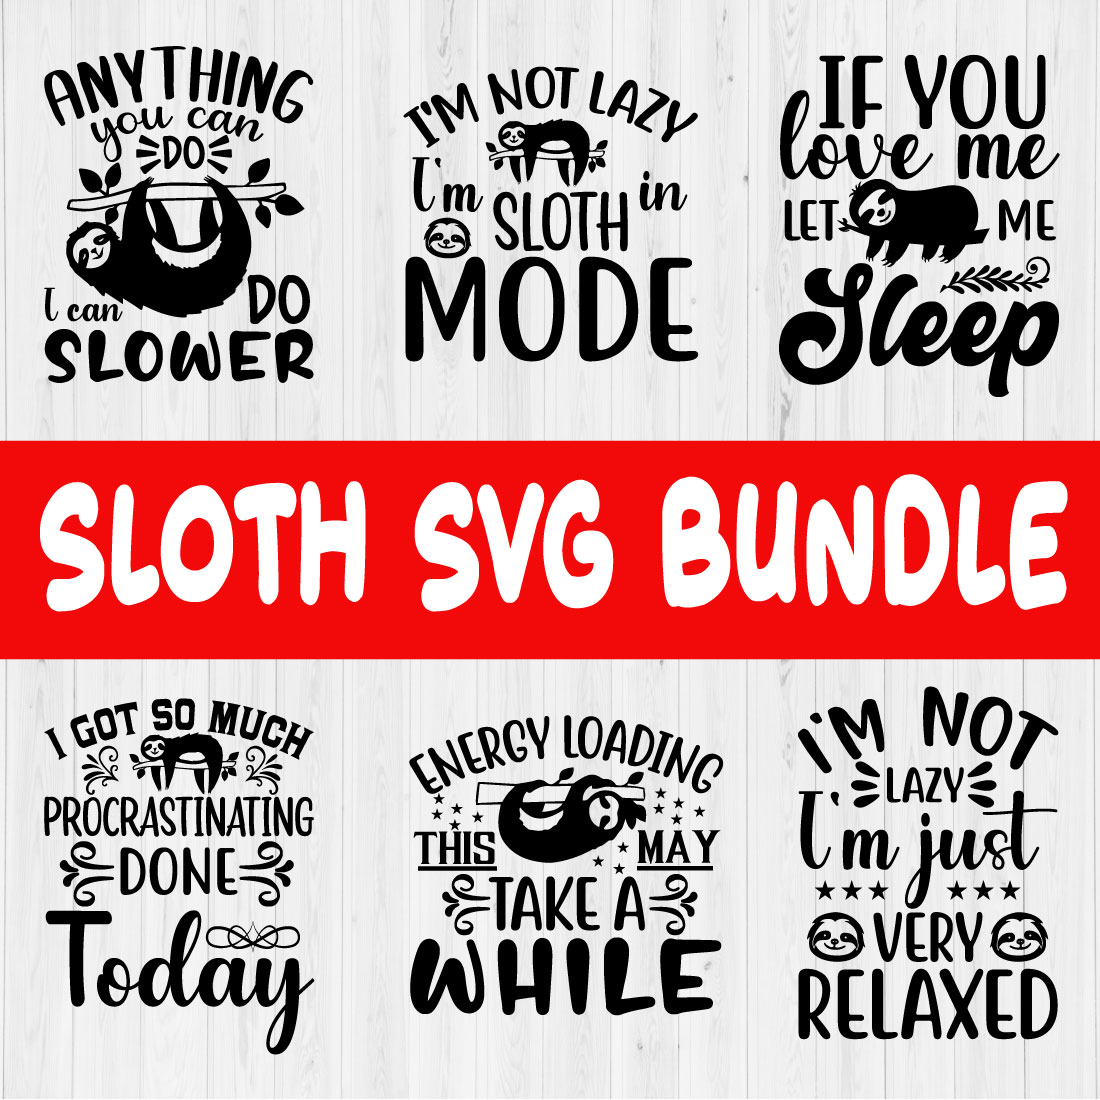 Sloth Typography Design Bundle Vol6 cover image.